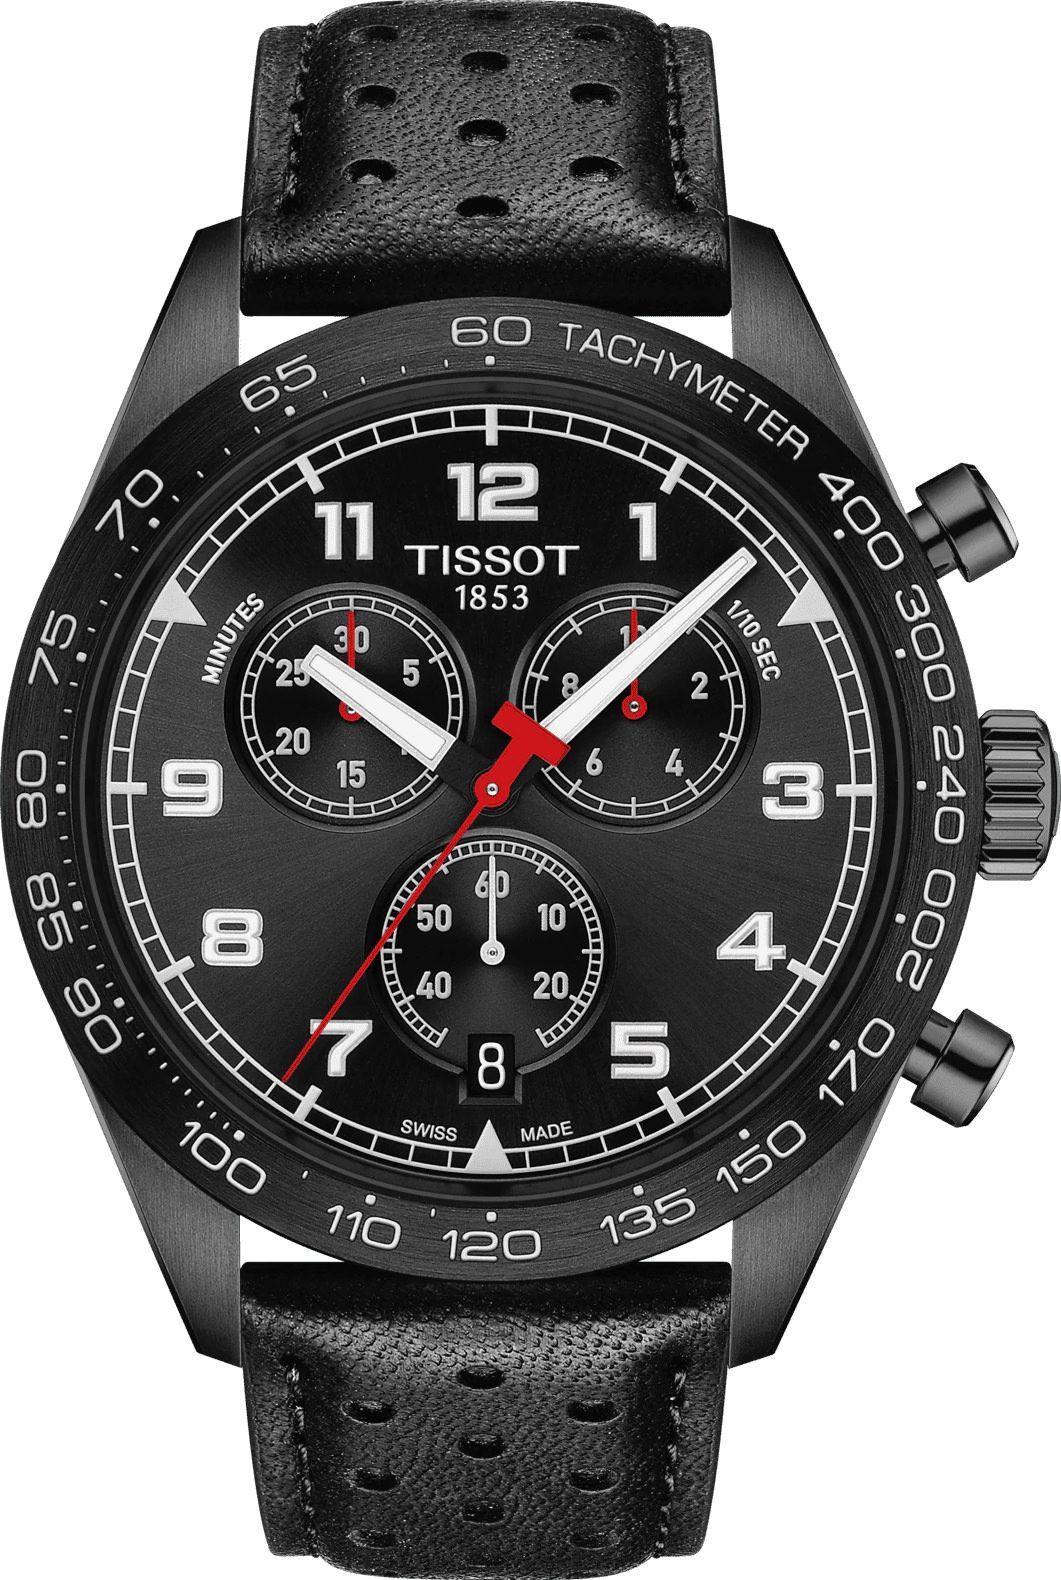 Tissot T-Sport Tissot PRS 516 Black Dial 45 mm Quartz Watch For Men - 1